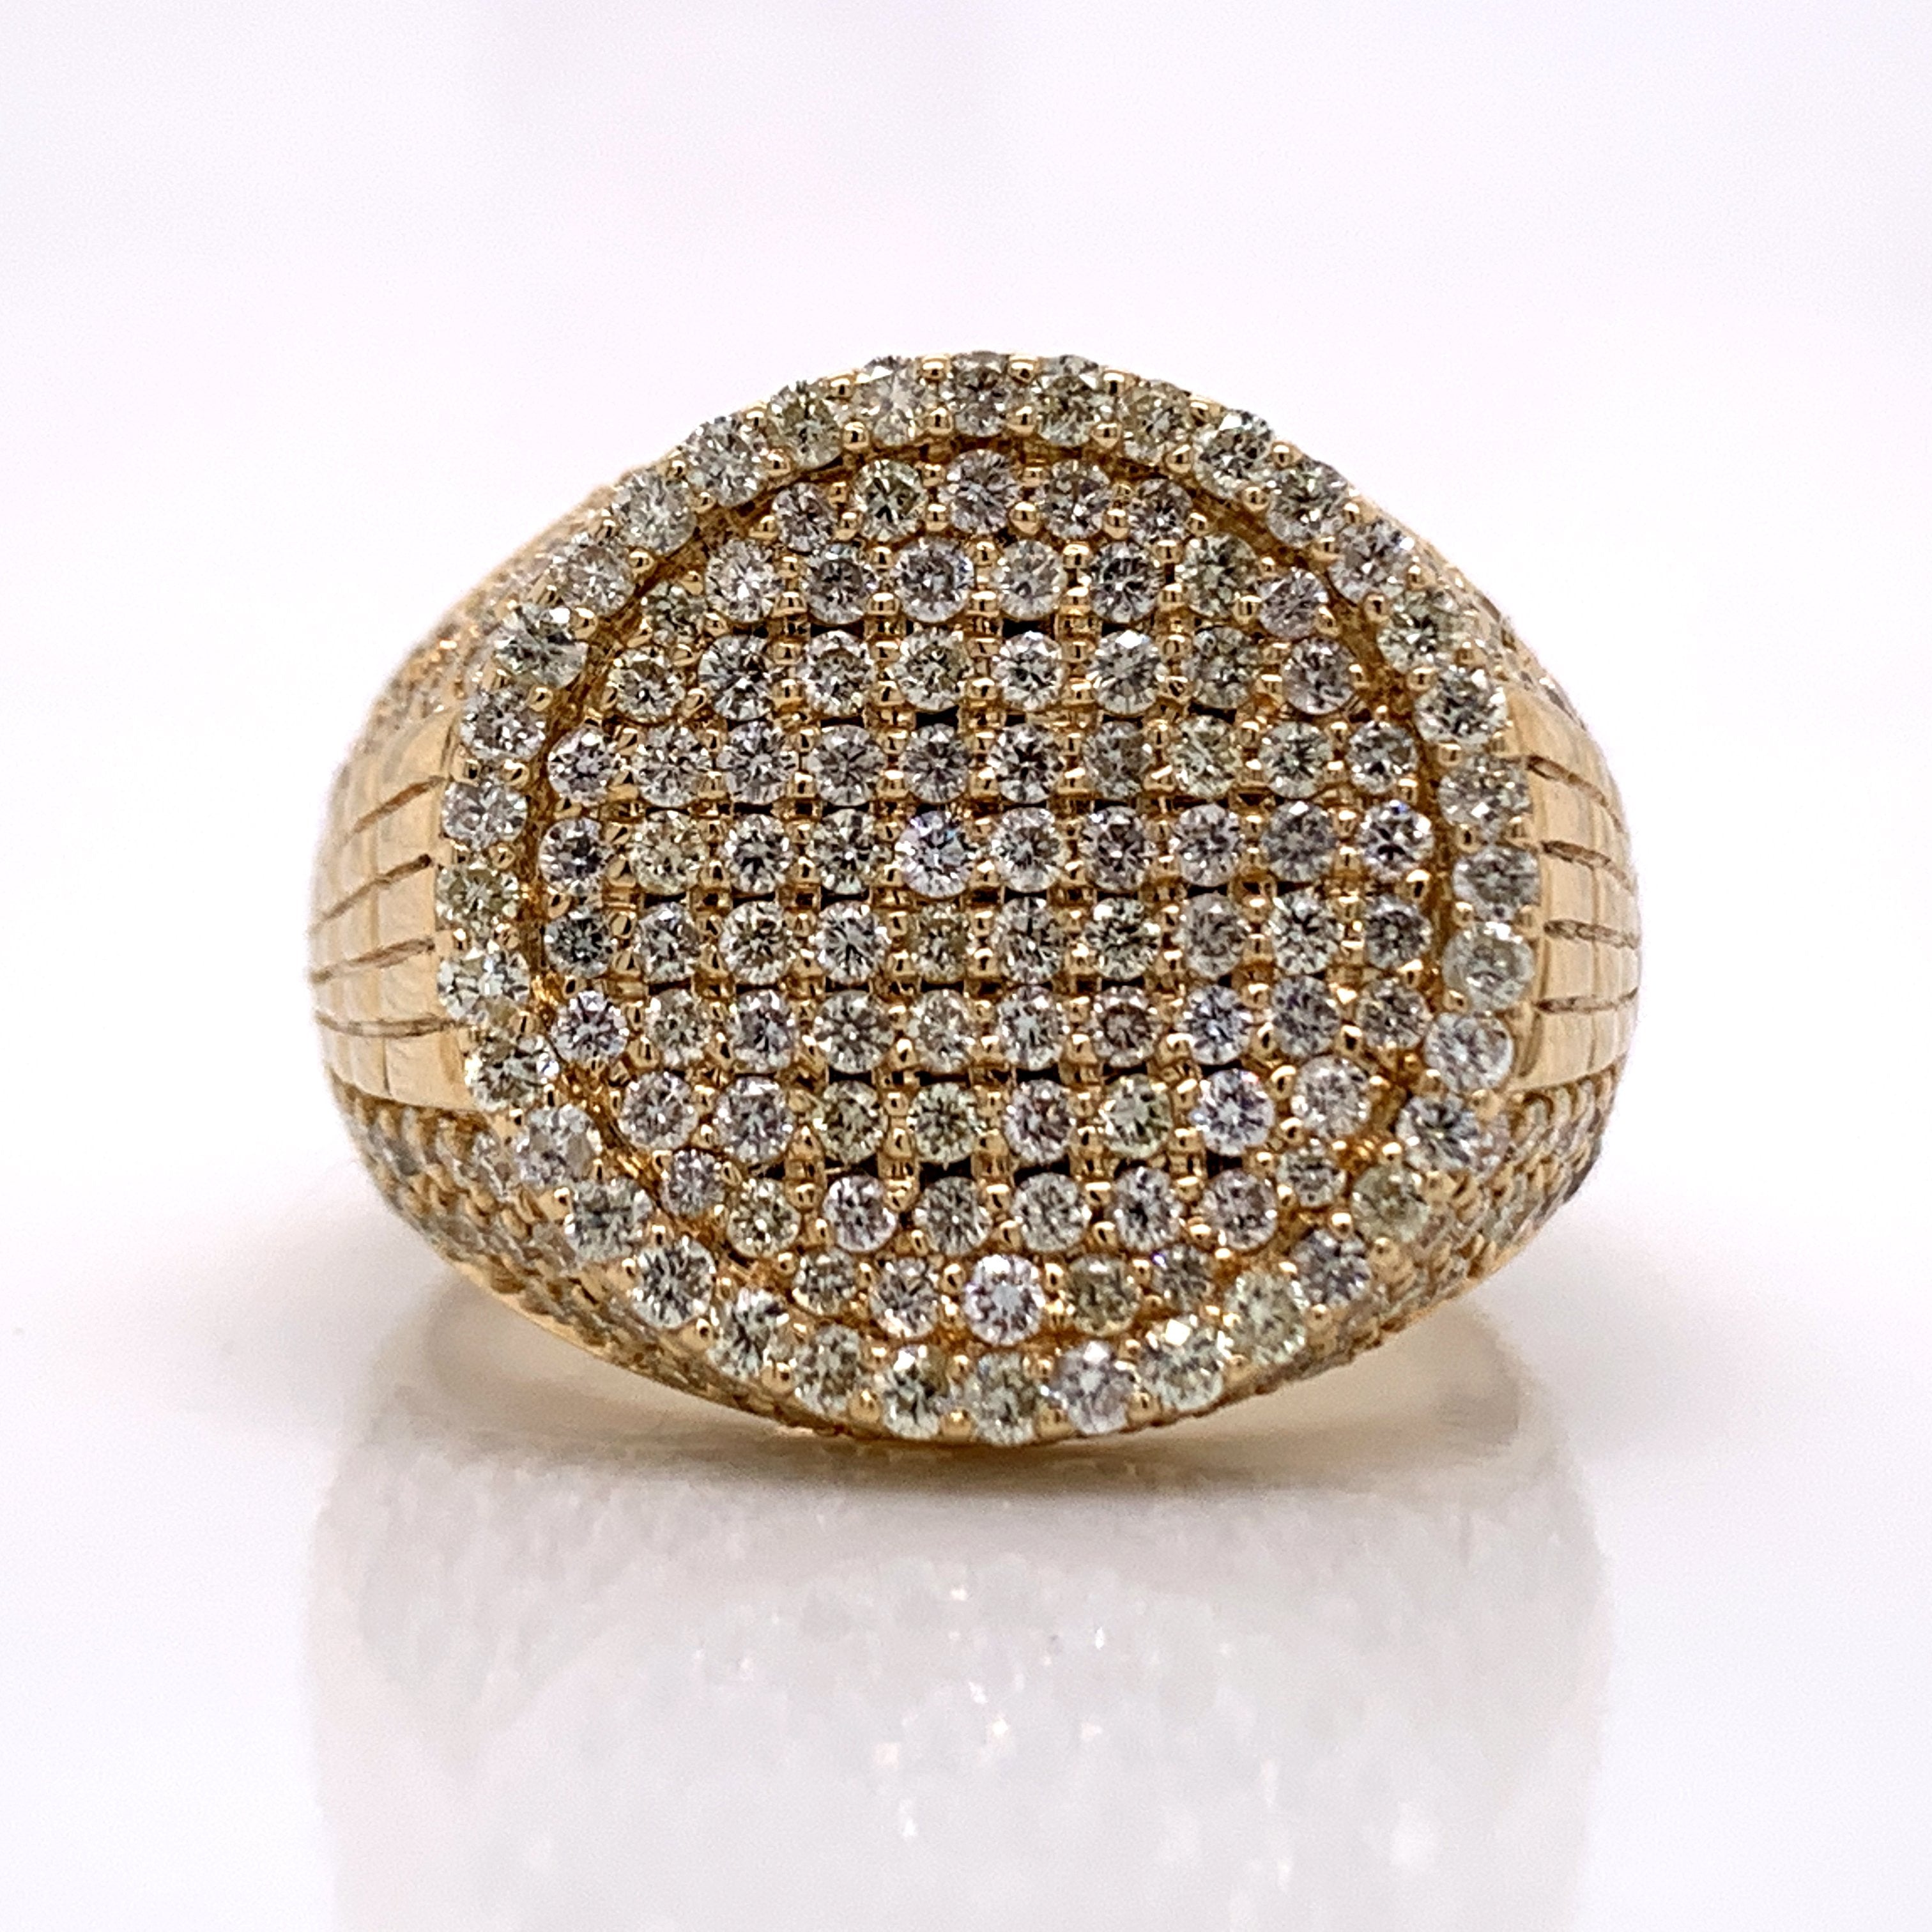 2.50 CT. Diamond Ring in 14K Gold - White Carat Diamonds 